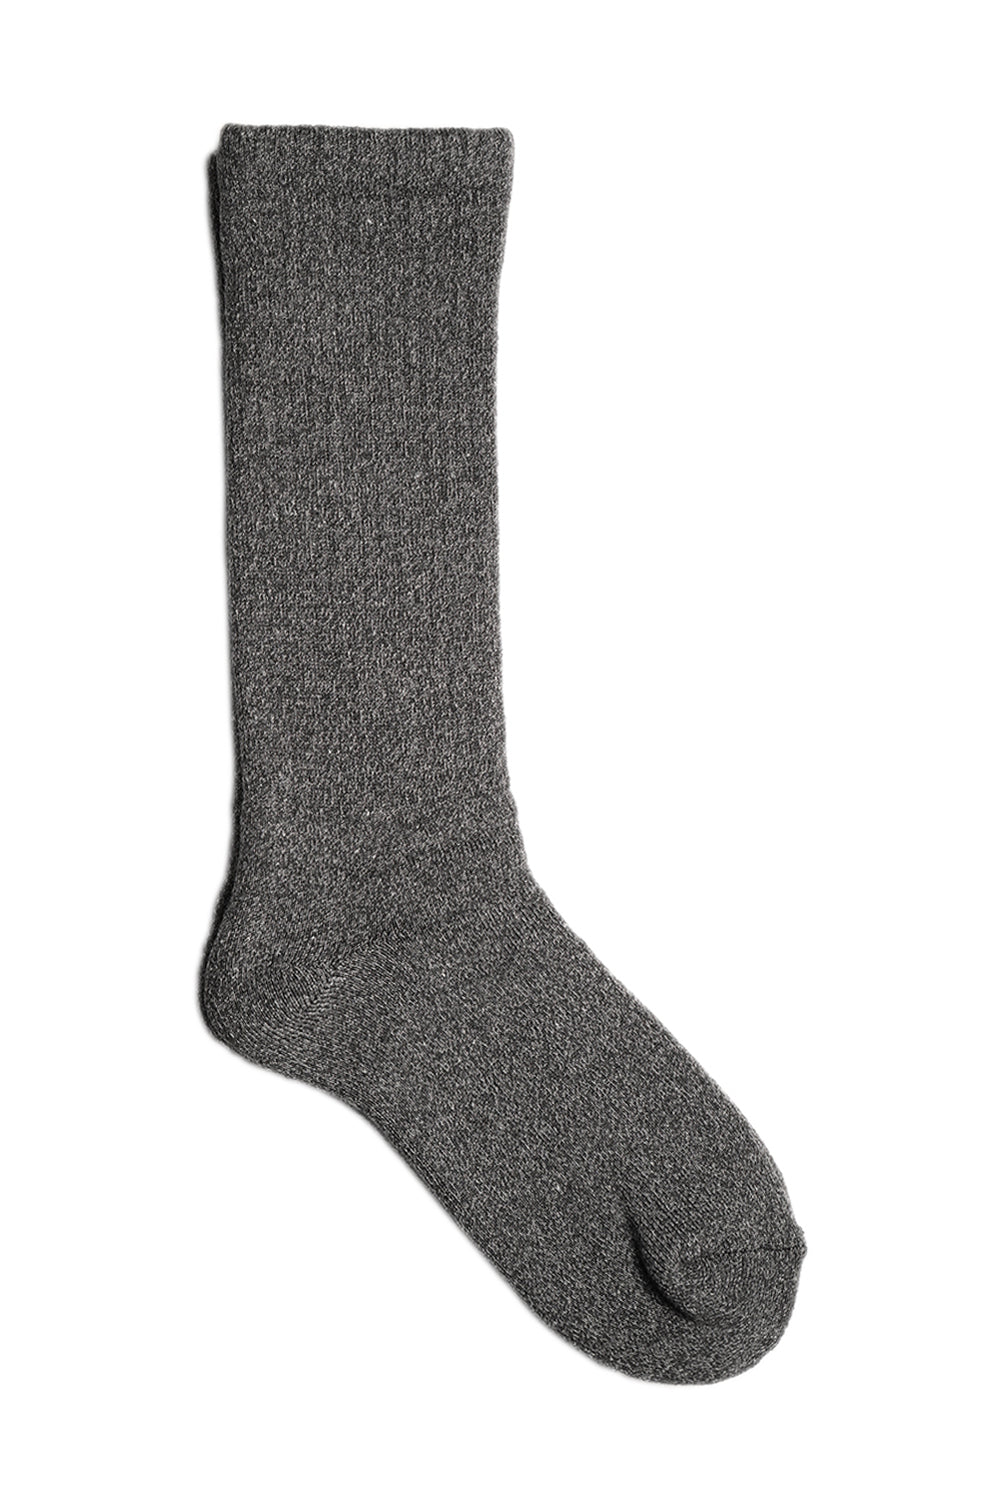 Lot.600 Boots Socks -Covert Gray-